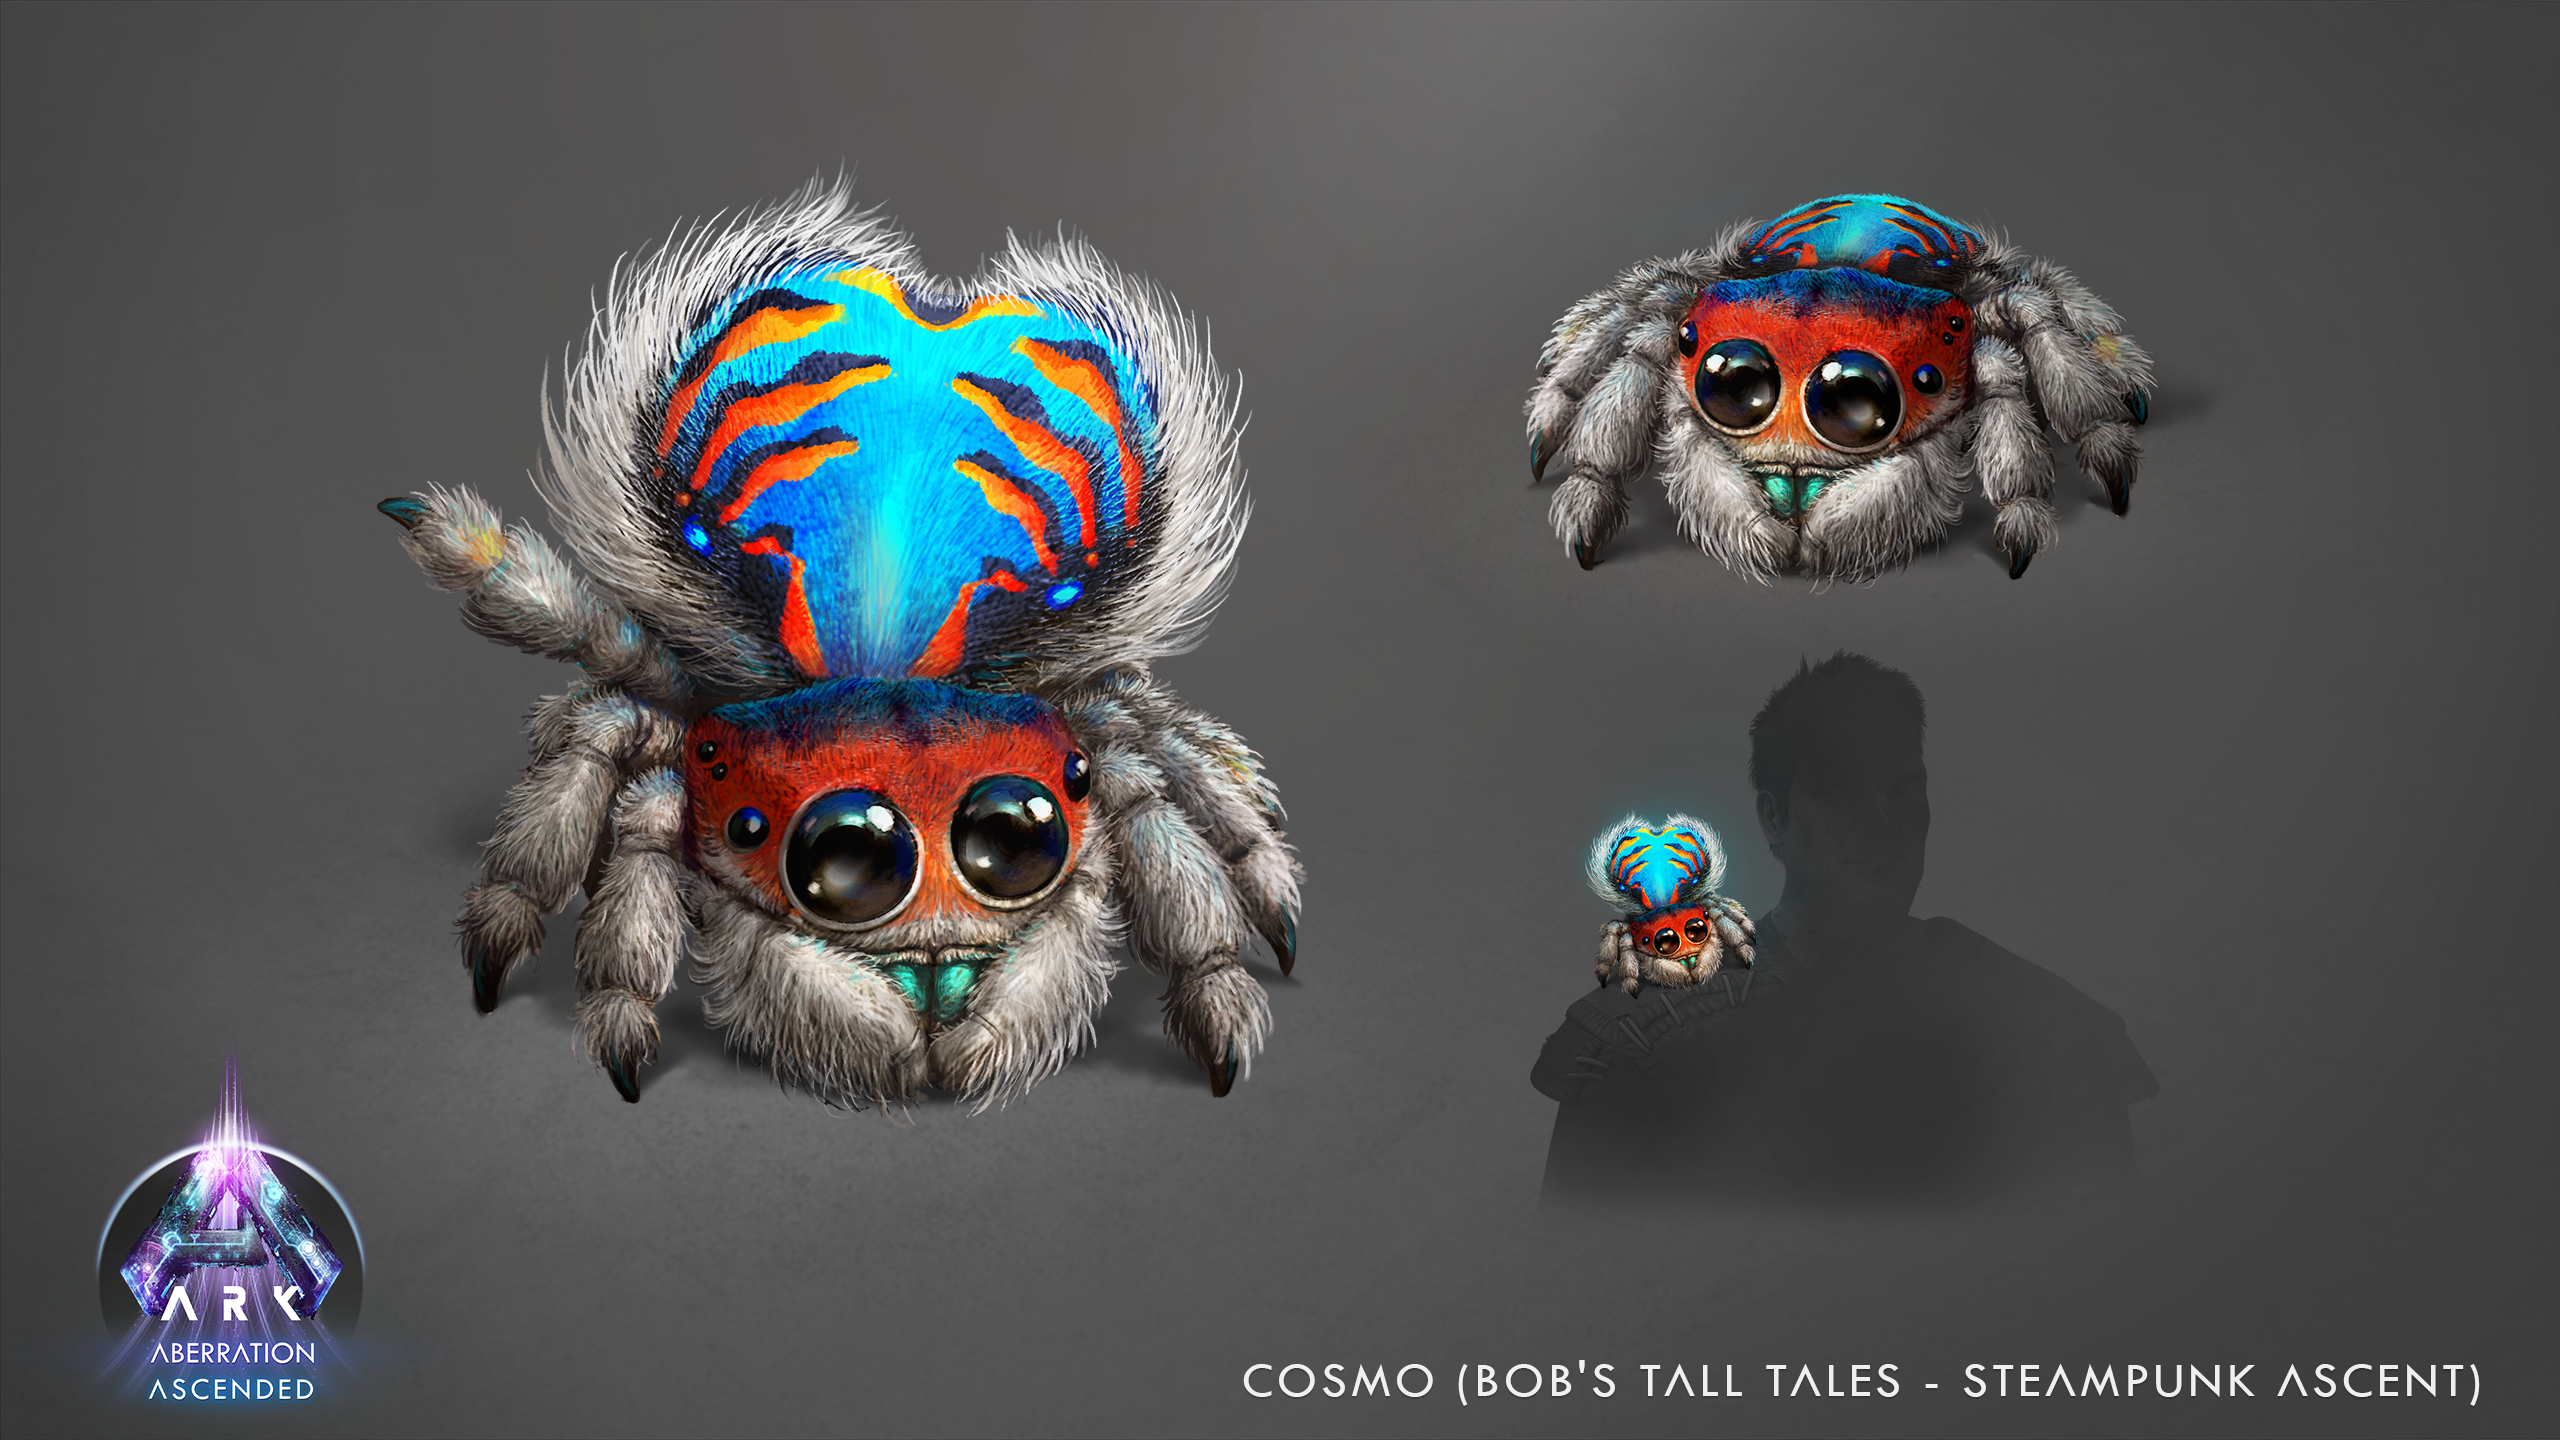 ASA_Cosmo_CC_'Bobs Tall Tales - Steampunk-Ascent' Kreatur: Cosmo- Entwurfszeichnung - mit Logo419_19_July_StA_Post_2560x1440